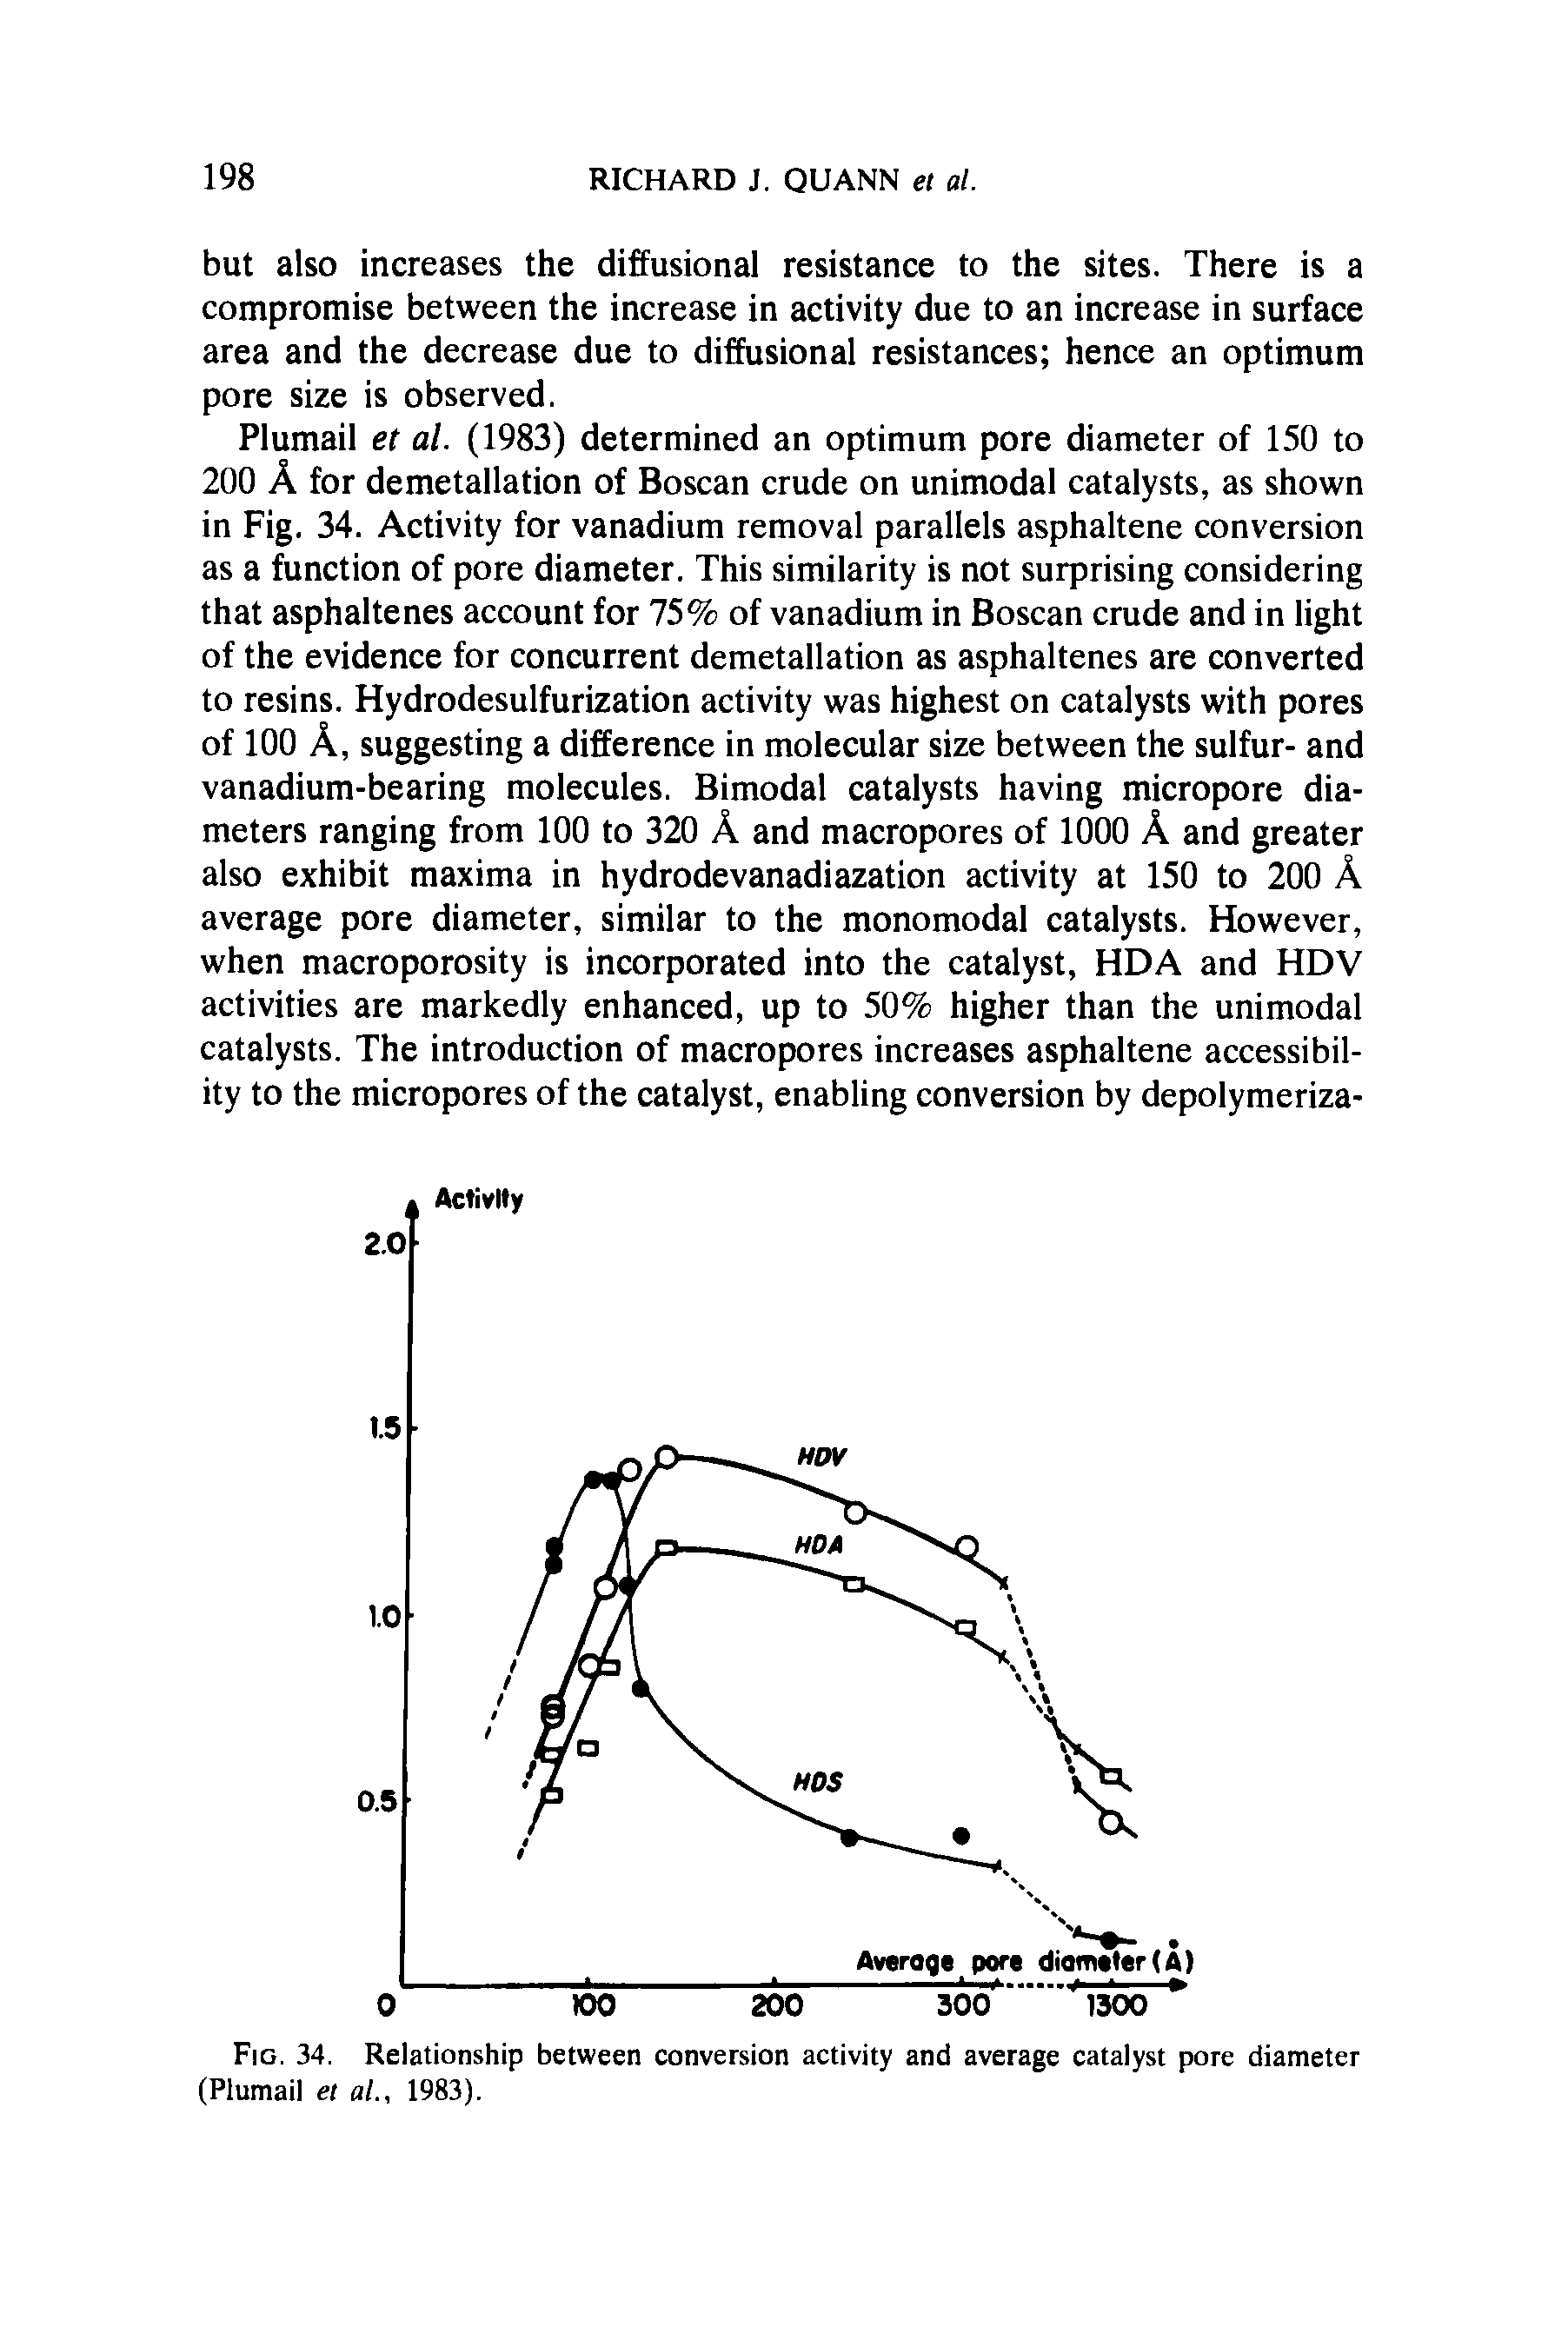 Fig. 34. Relationship between conversion activity and average catalyst pore diameter (Plumail et al., 1983).